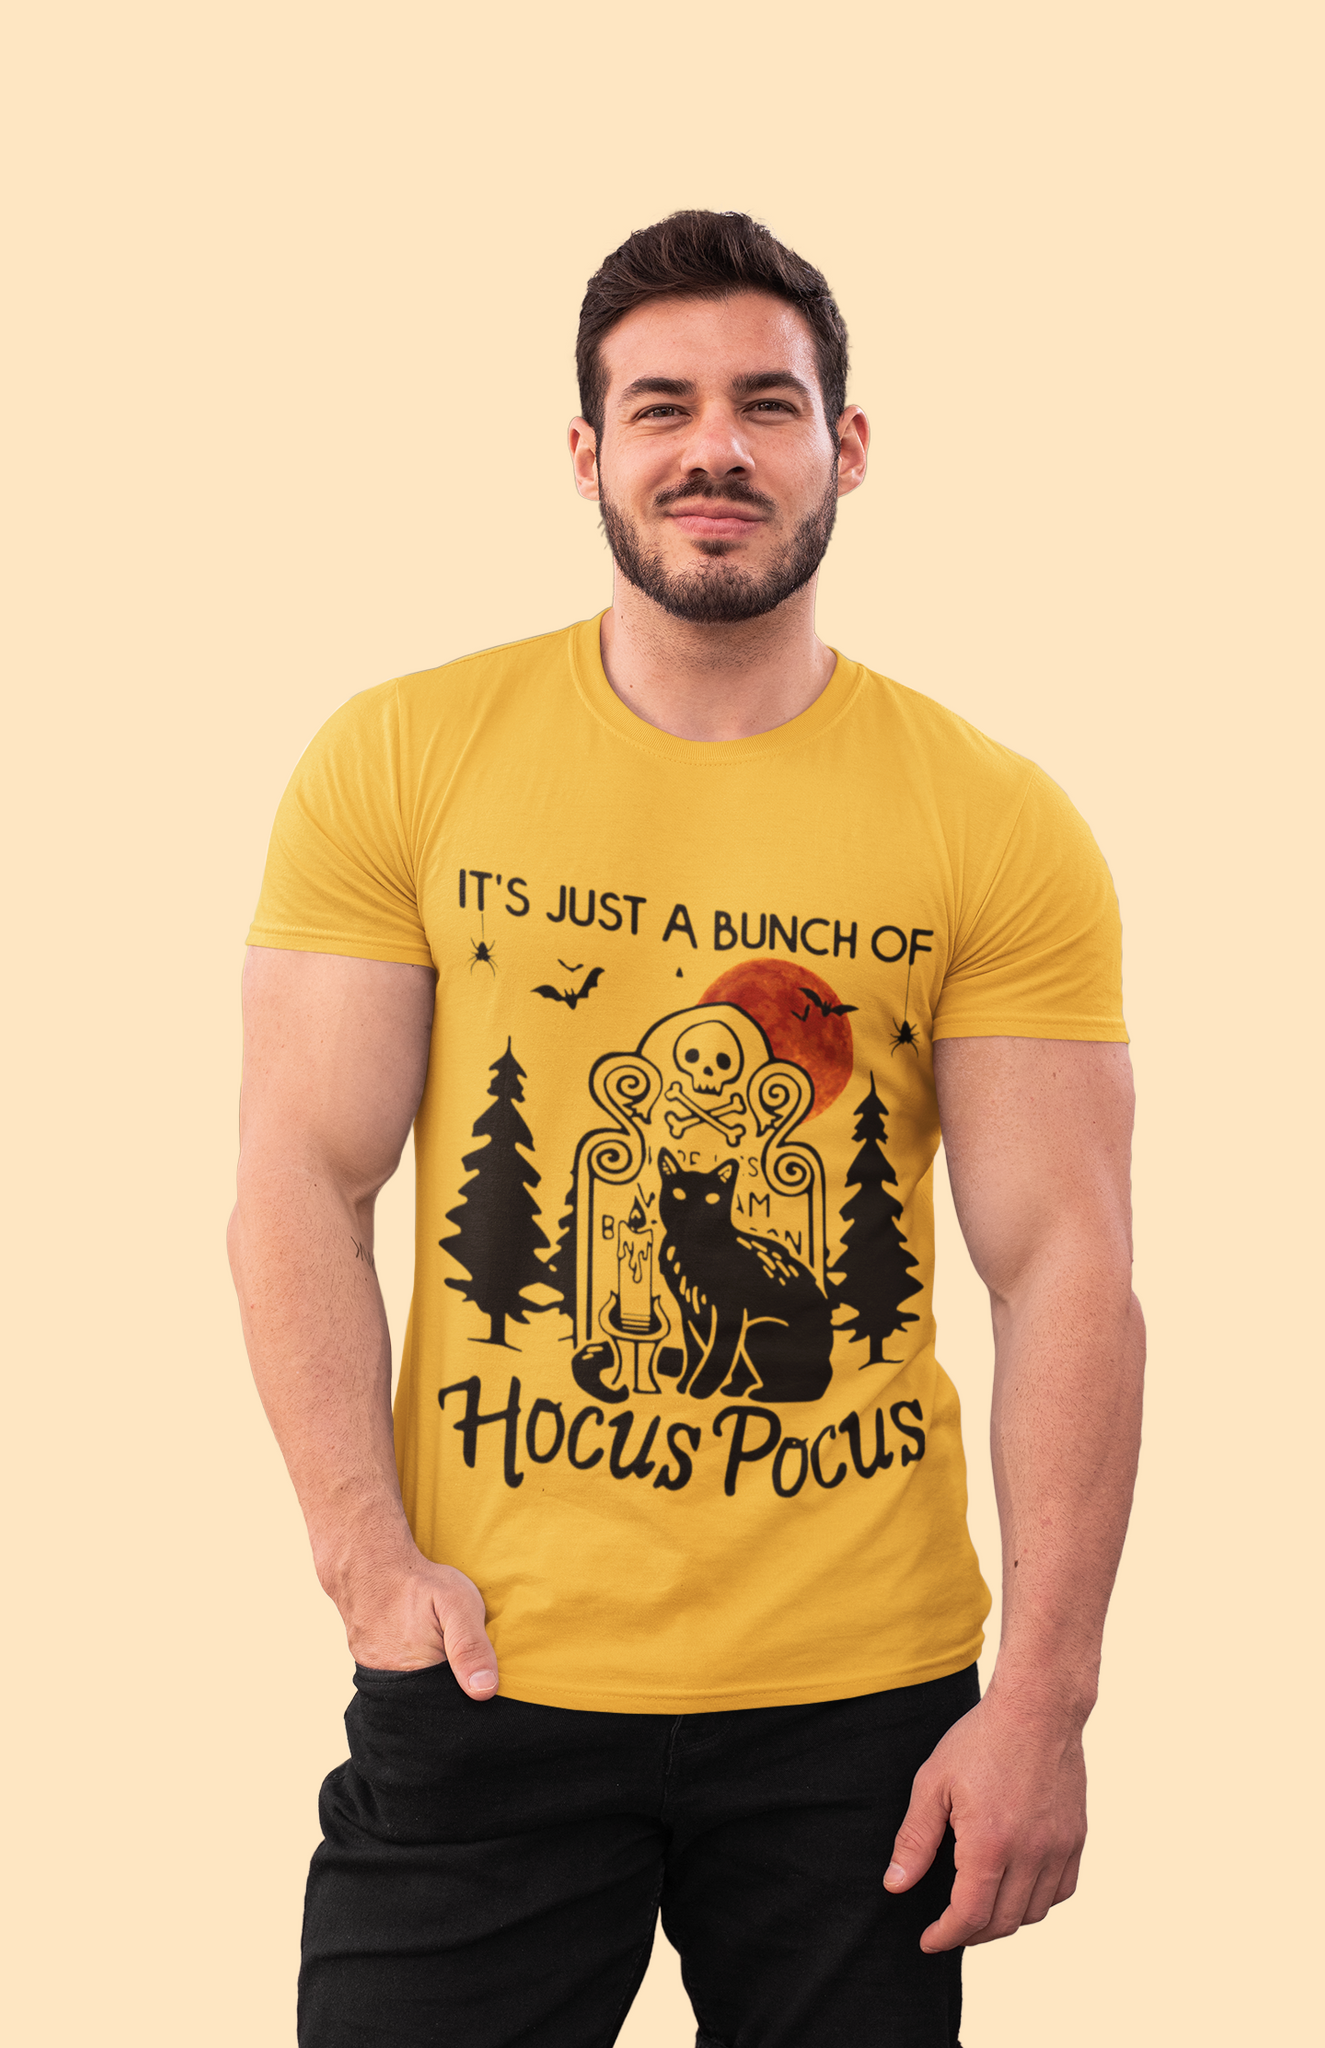 Hocus Pocus T Shirt, Its Just A Bunch Of Hocus Pocus Shirt, Thackery Binx Tshirt, Halloween Gifts